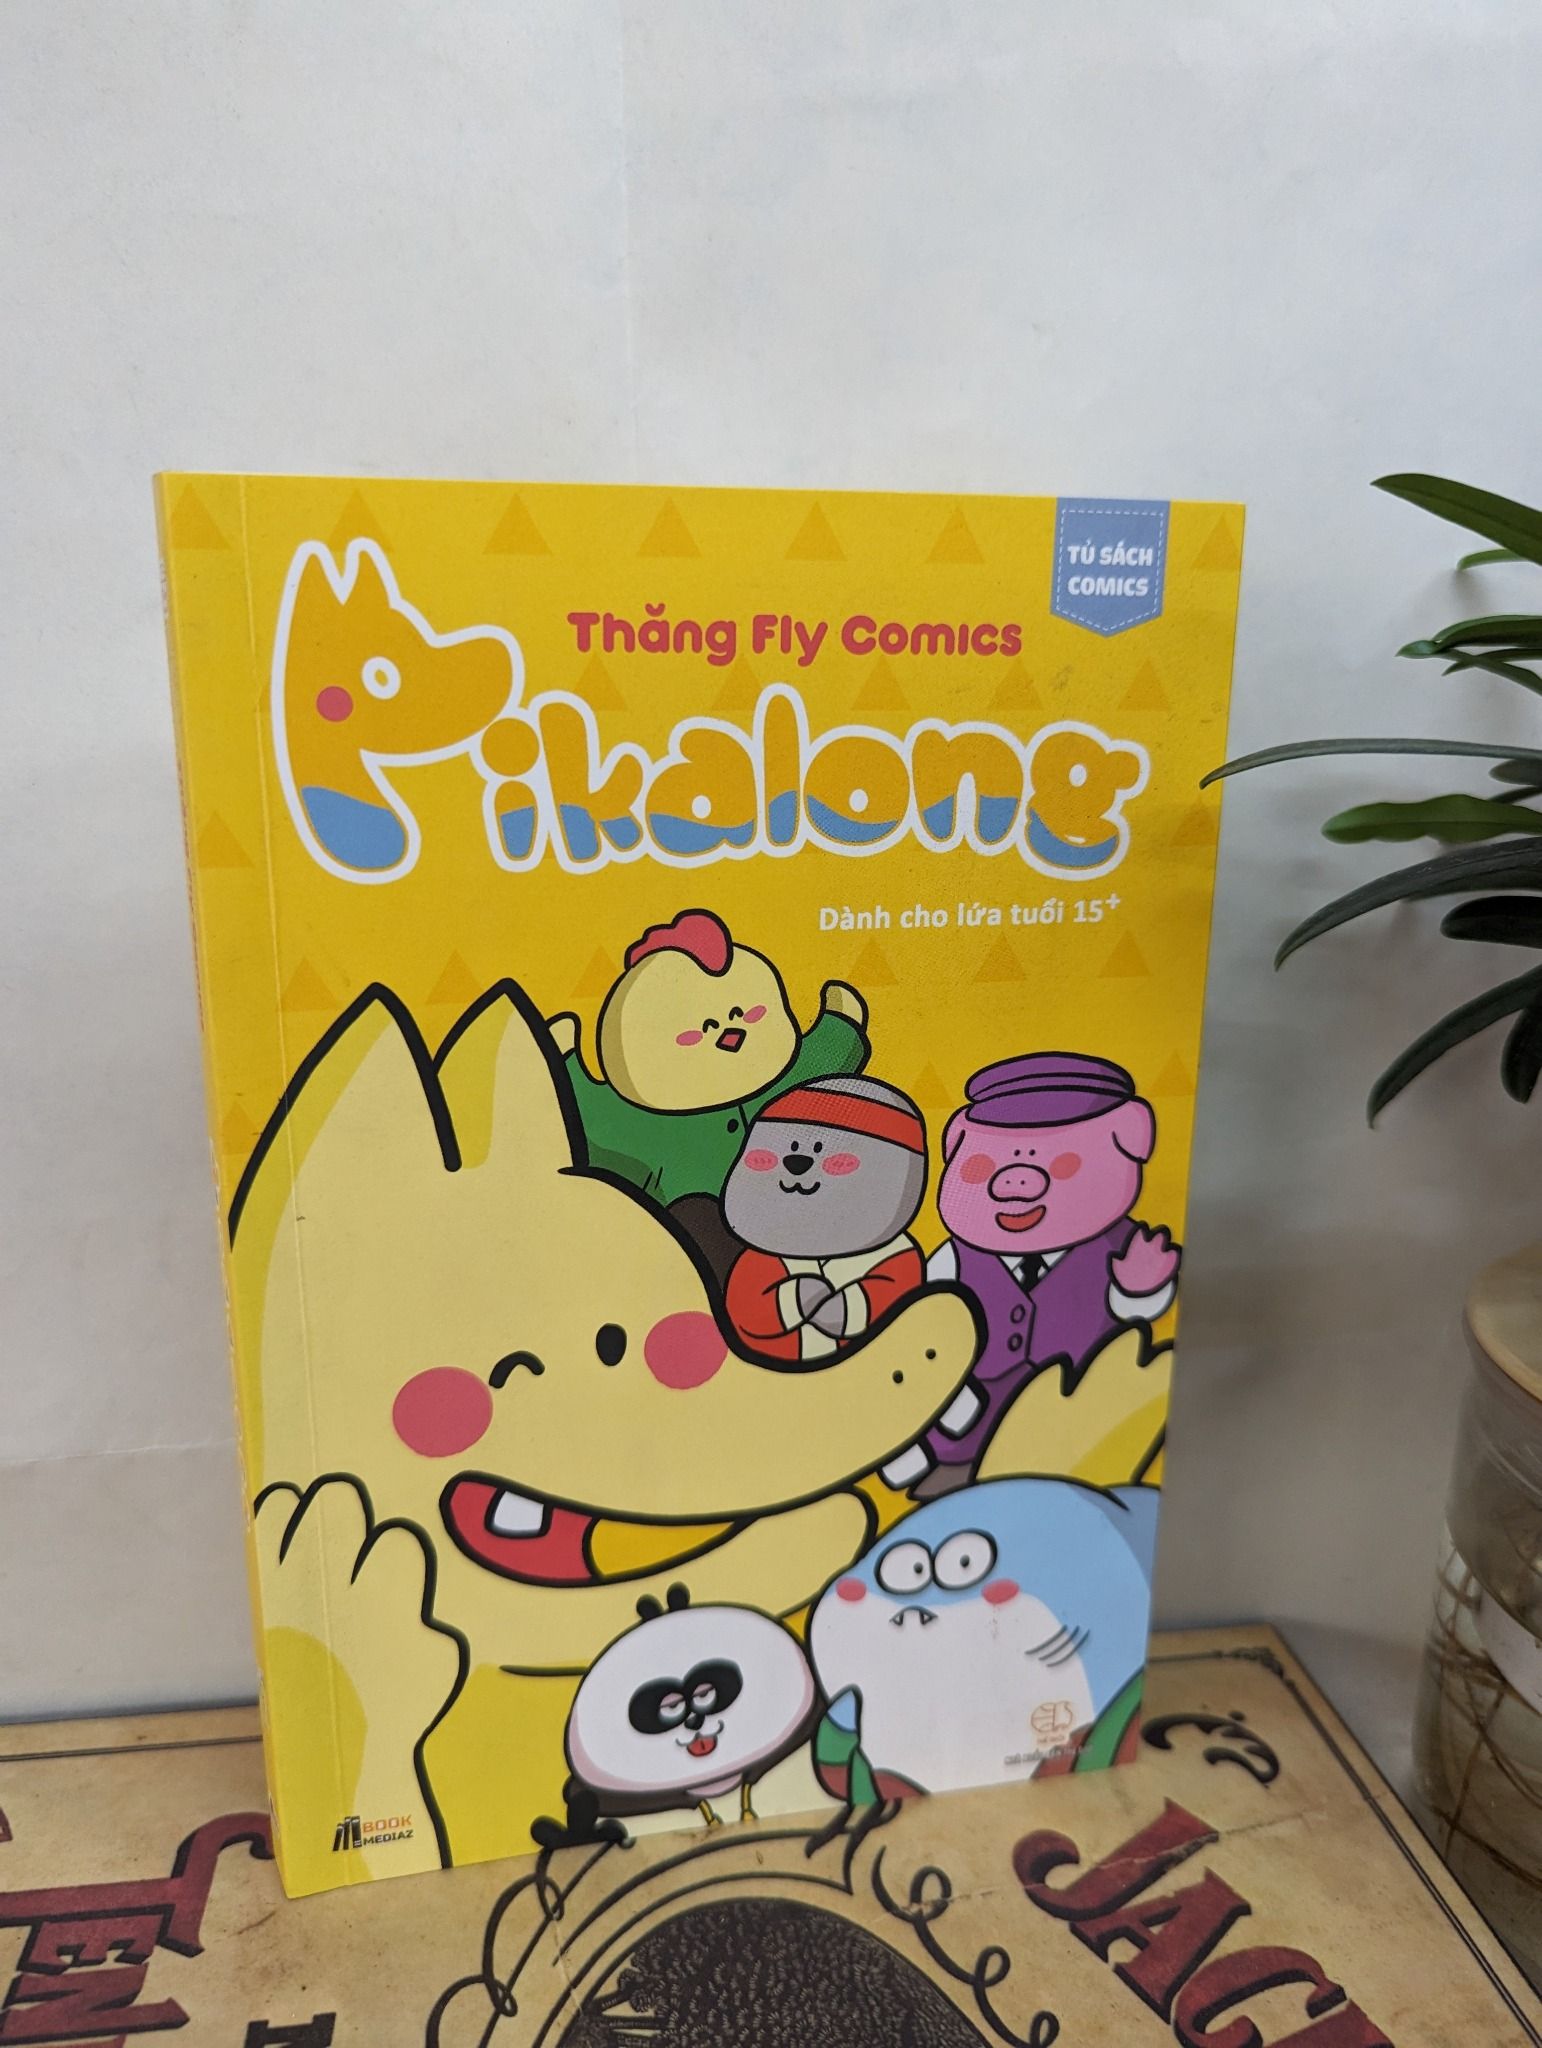  Pikalong - Thăng Fly Comics 